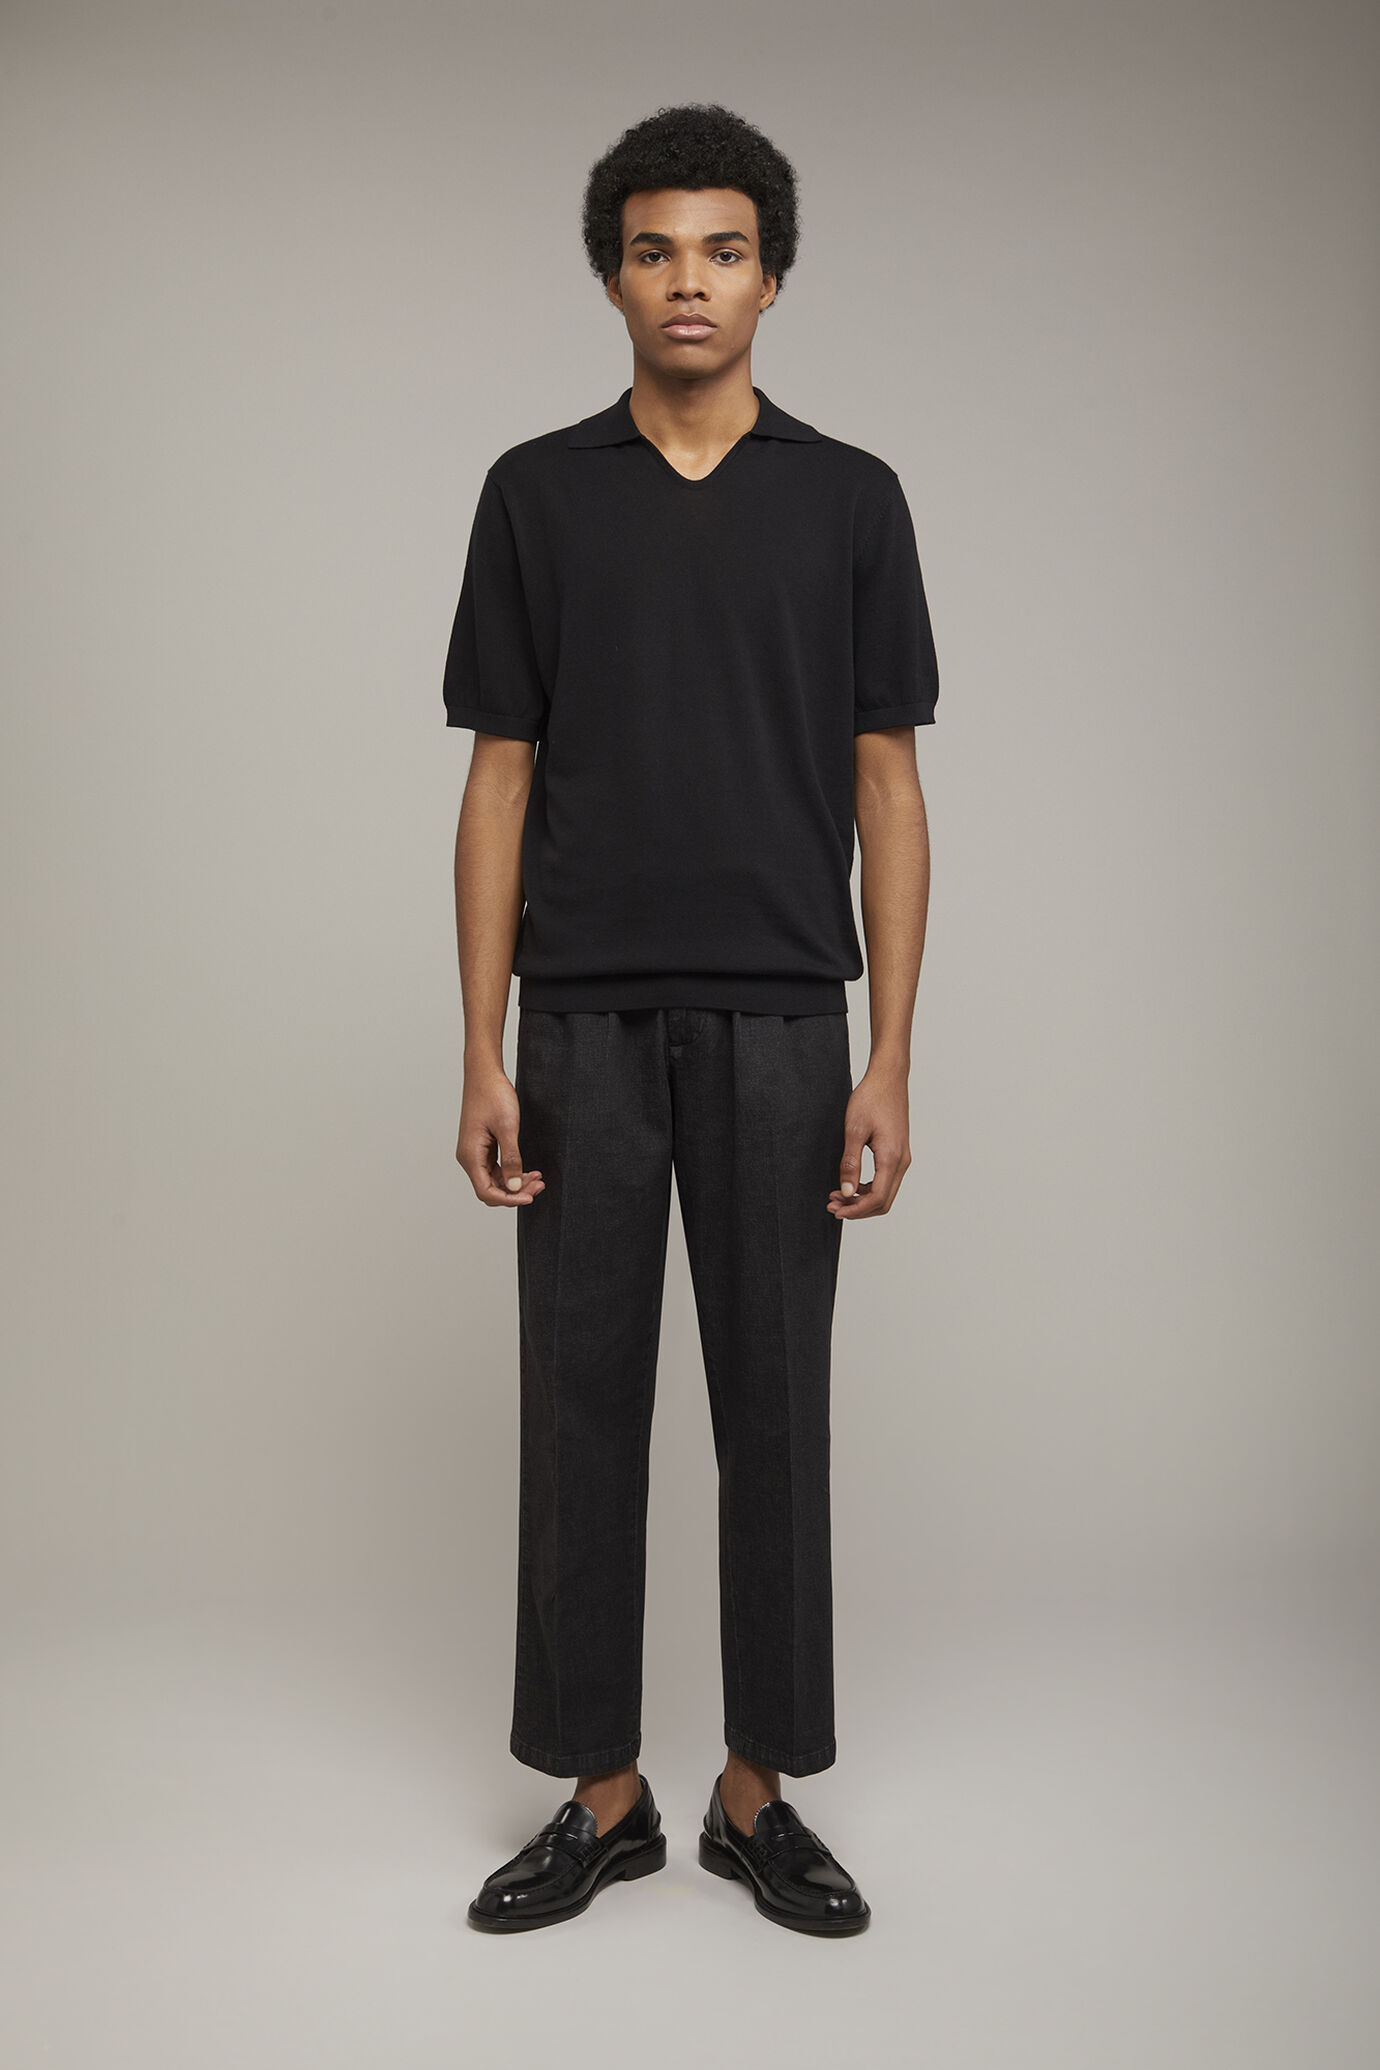 Men's technical trousers with double pinces light comfort fit denim fabric